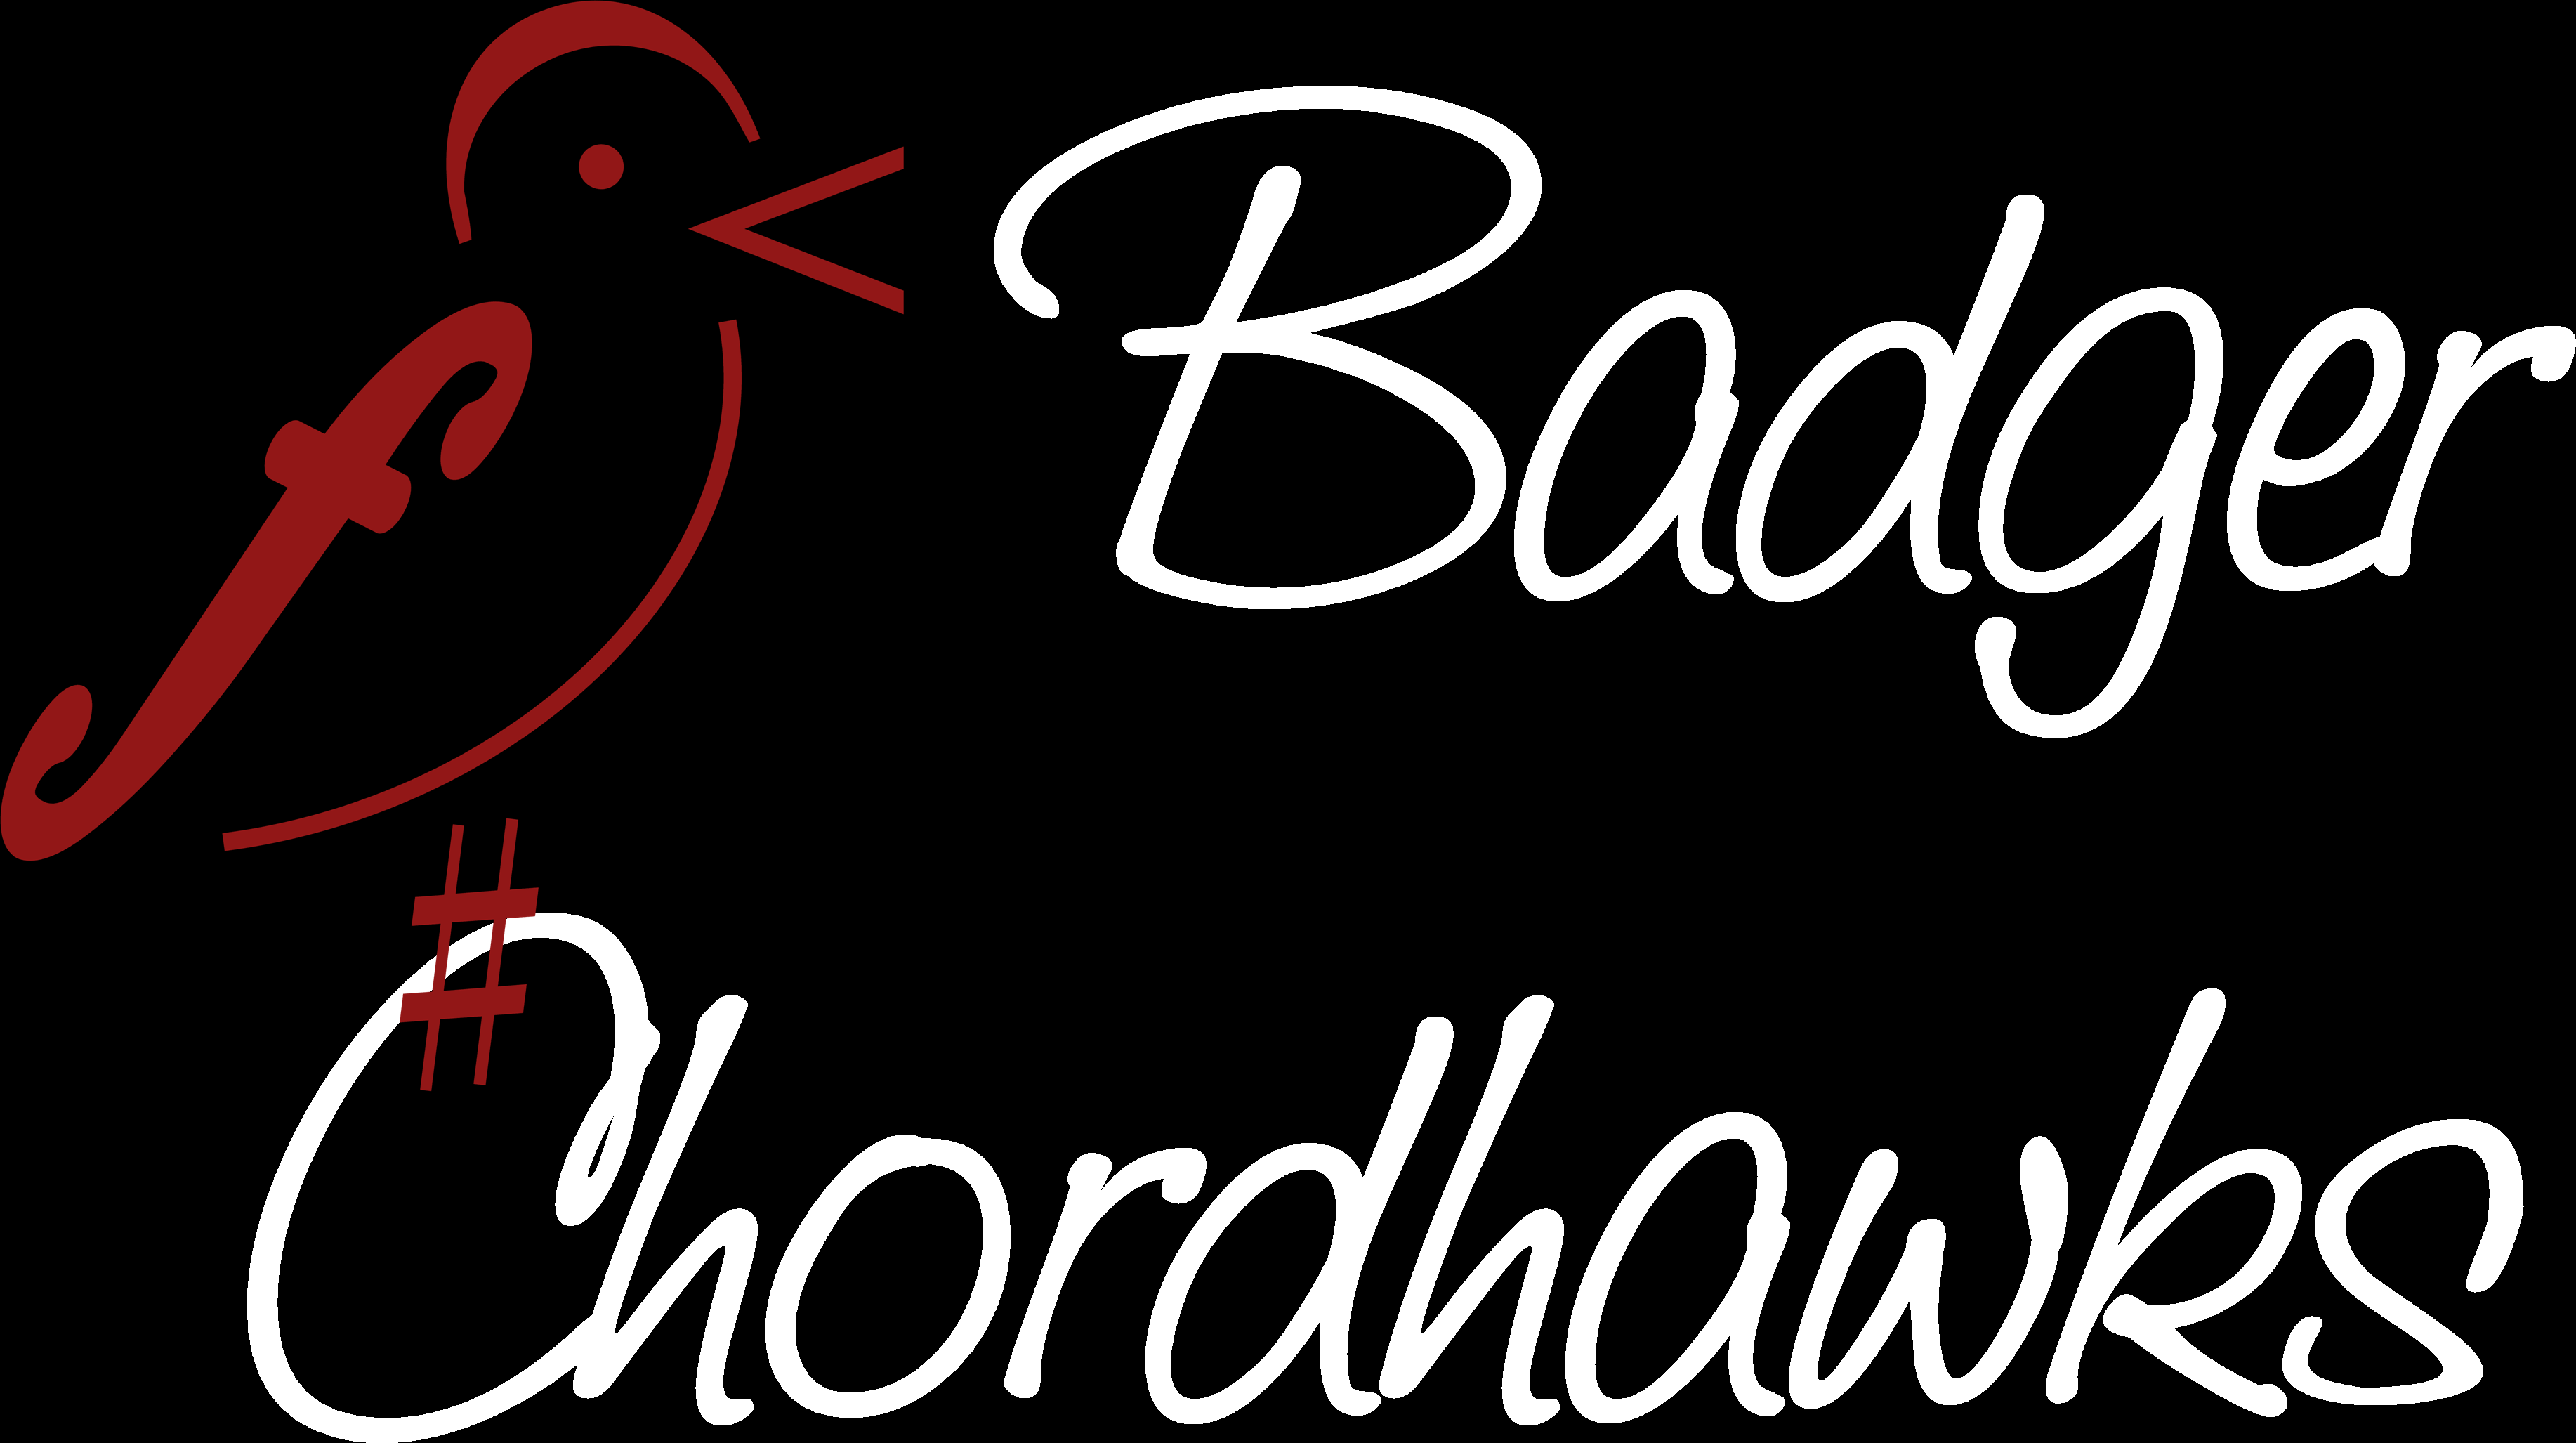 Badger Chordhawks Chorus Guild, Inc. logo